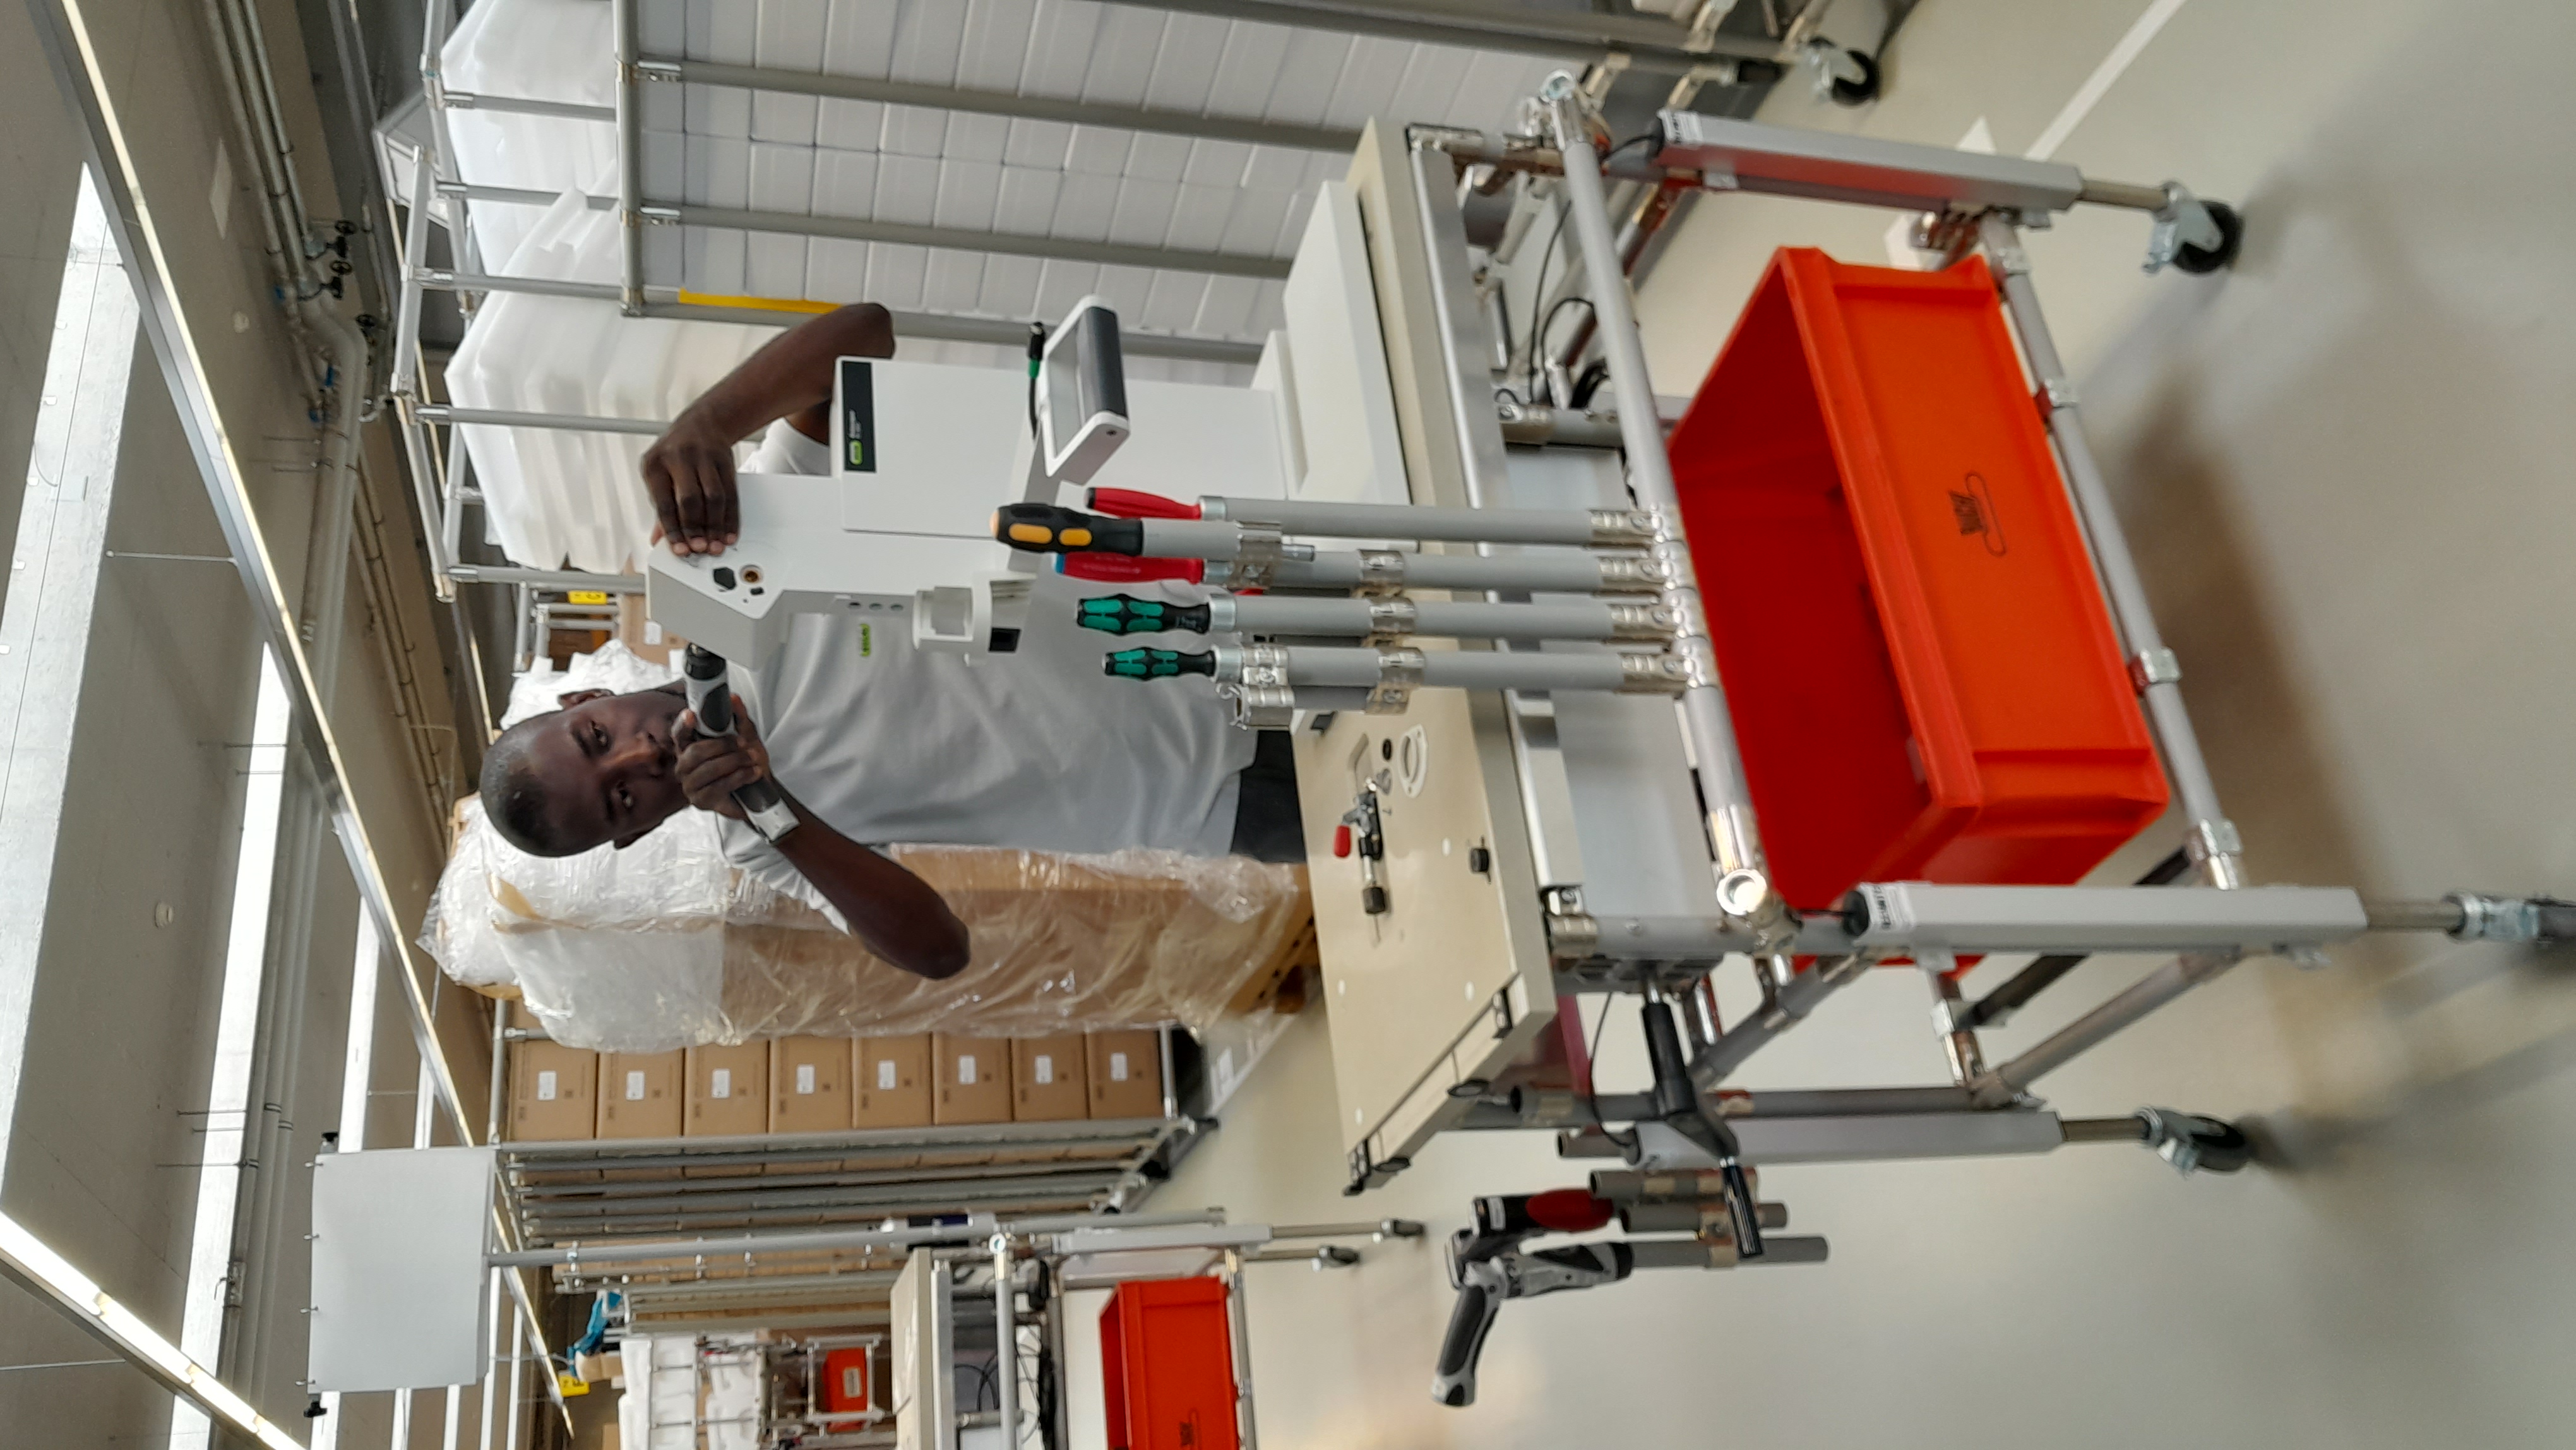 Martin Nambahu hard at work on the assembly line at Buchi.